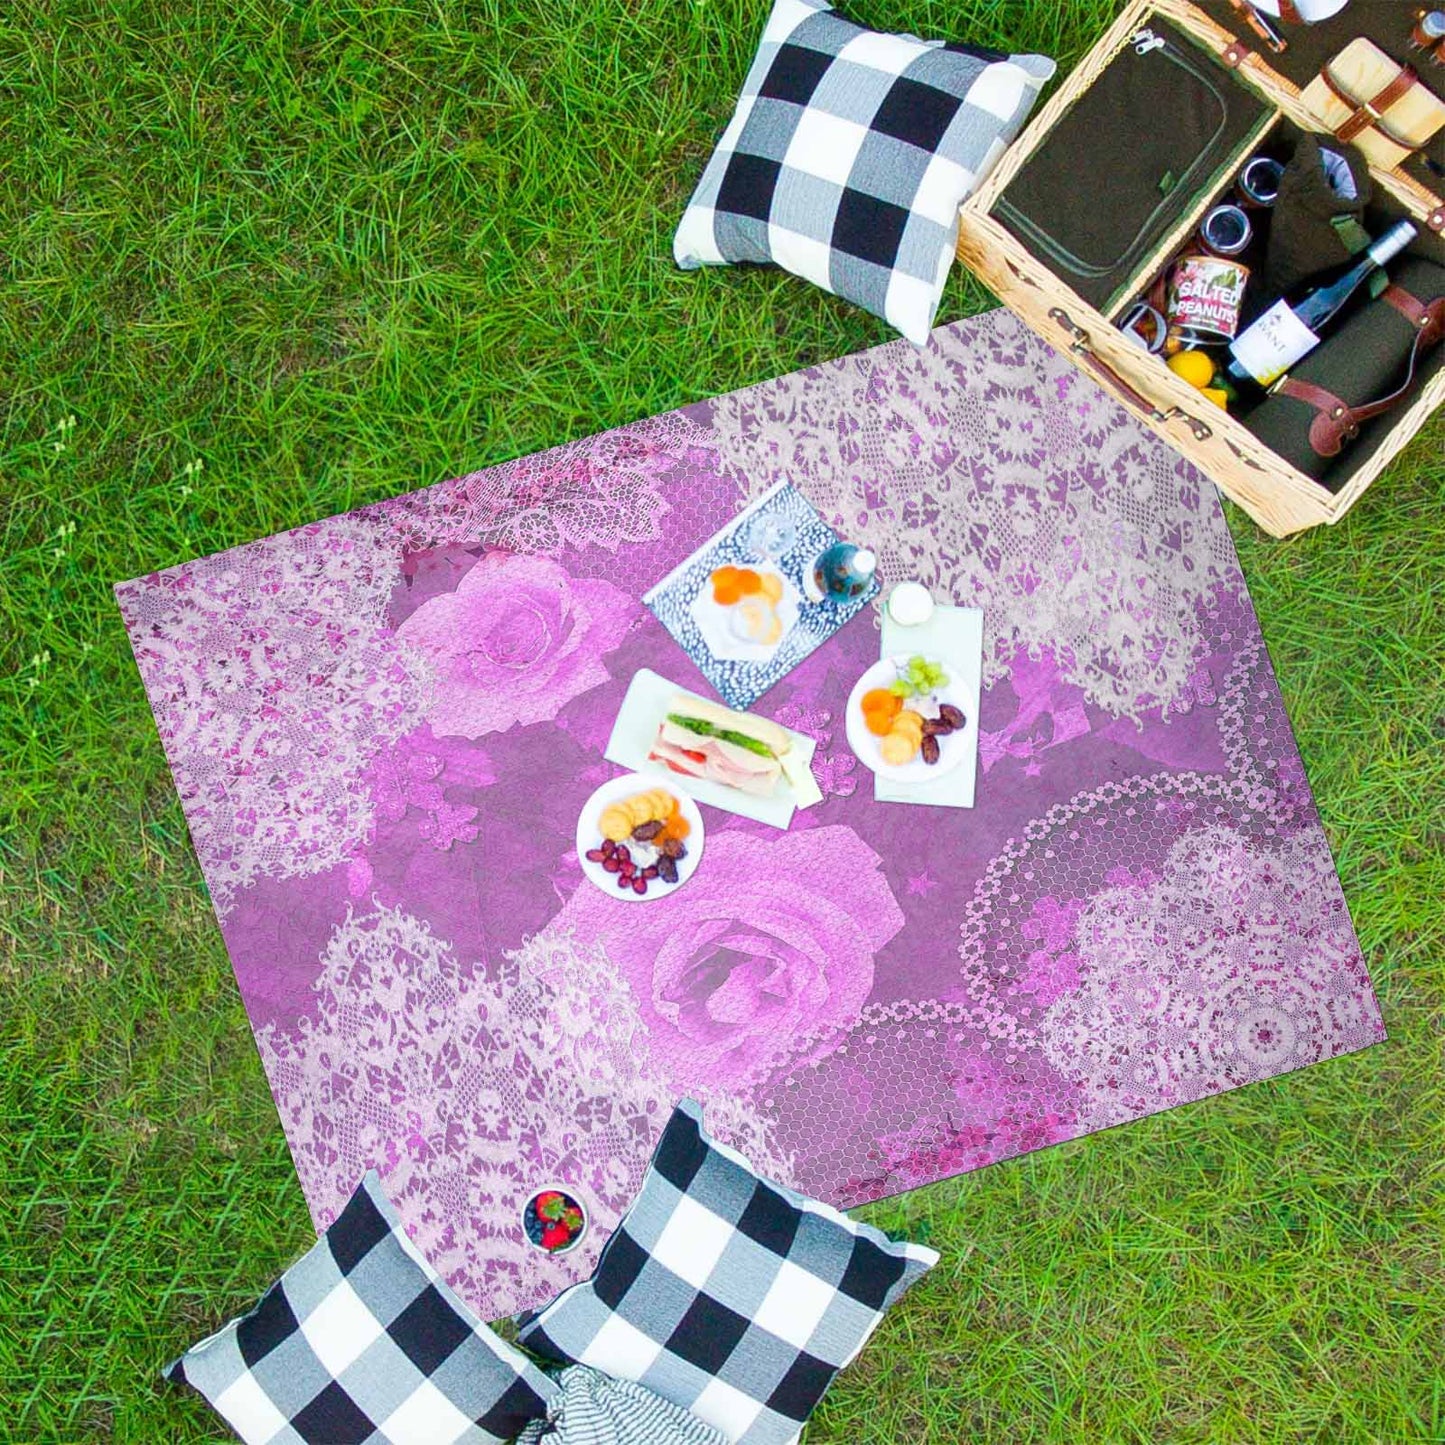 Victorian lace print waterproof picnic mat, 69 x 55in, design 03